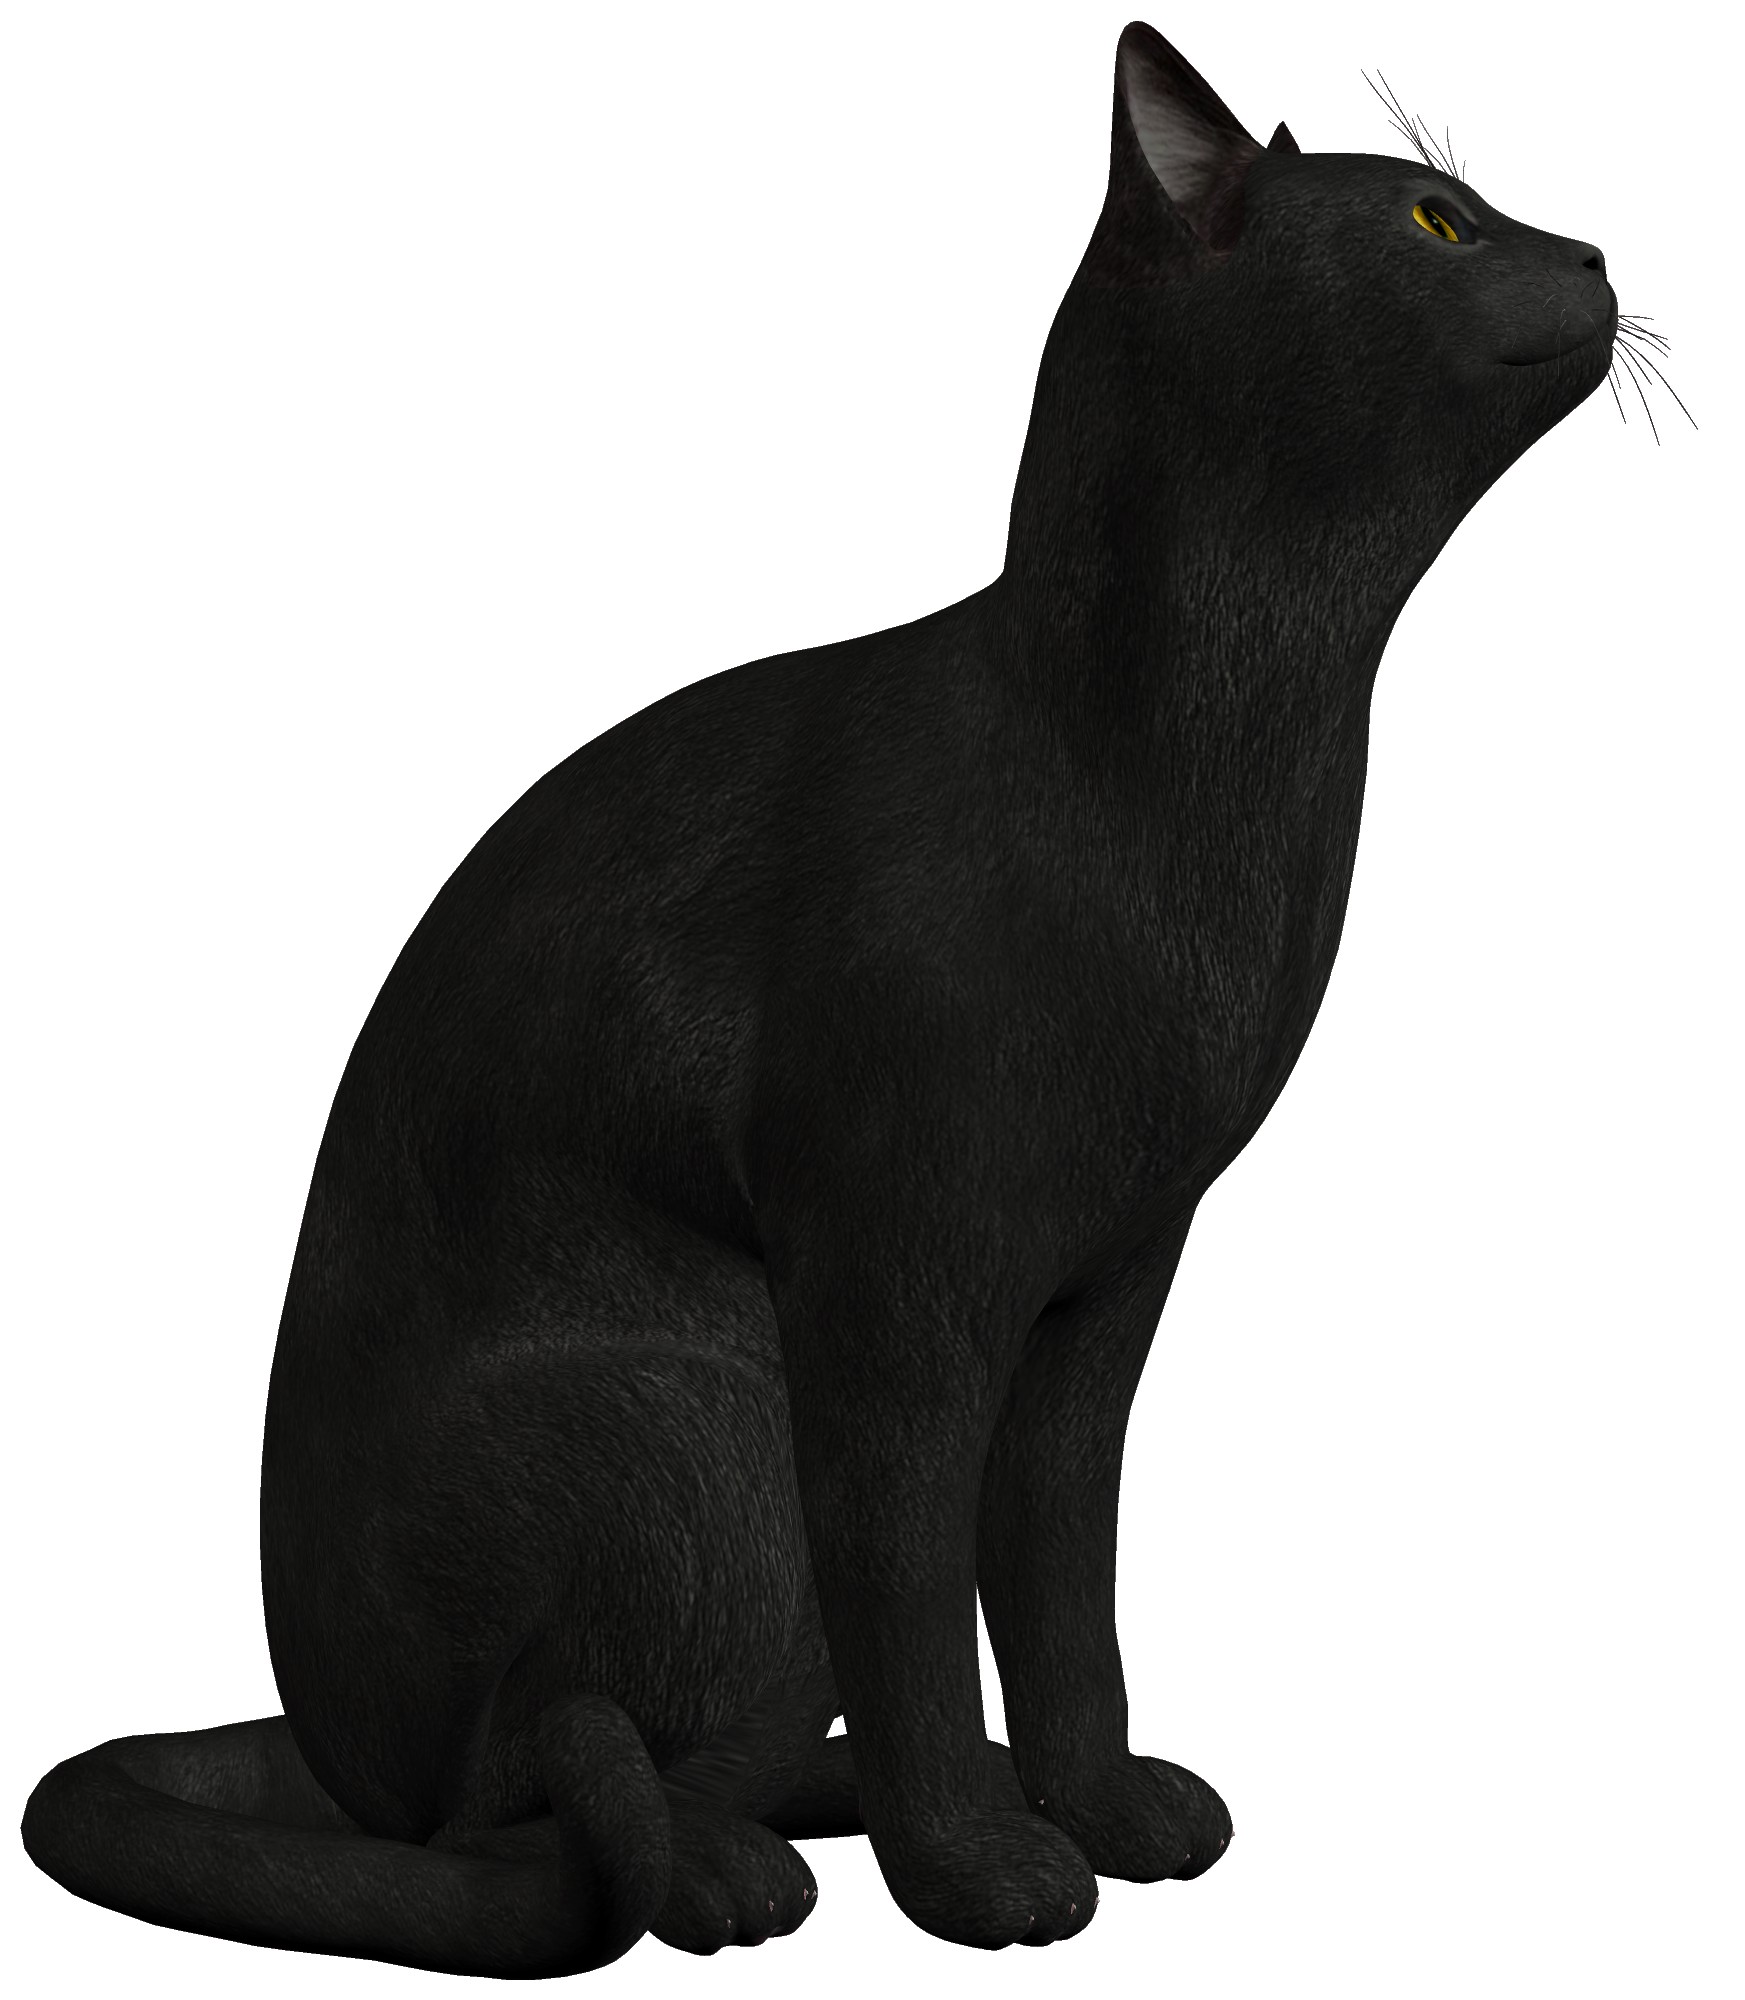 Black Cat PNG Clipart Best WEB Ripping Cats | juliasmitheppsteiner.me